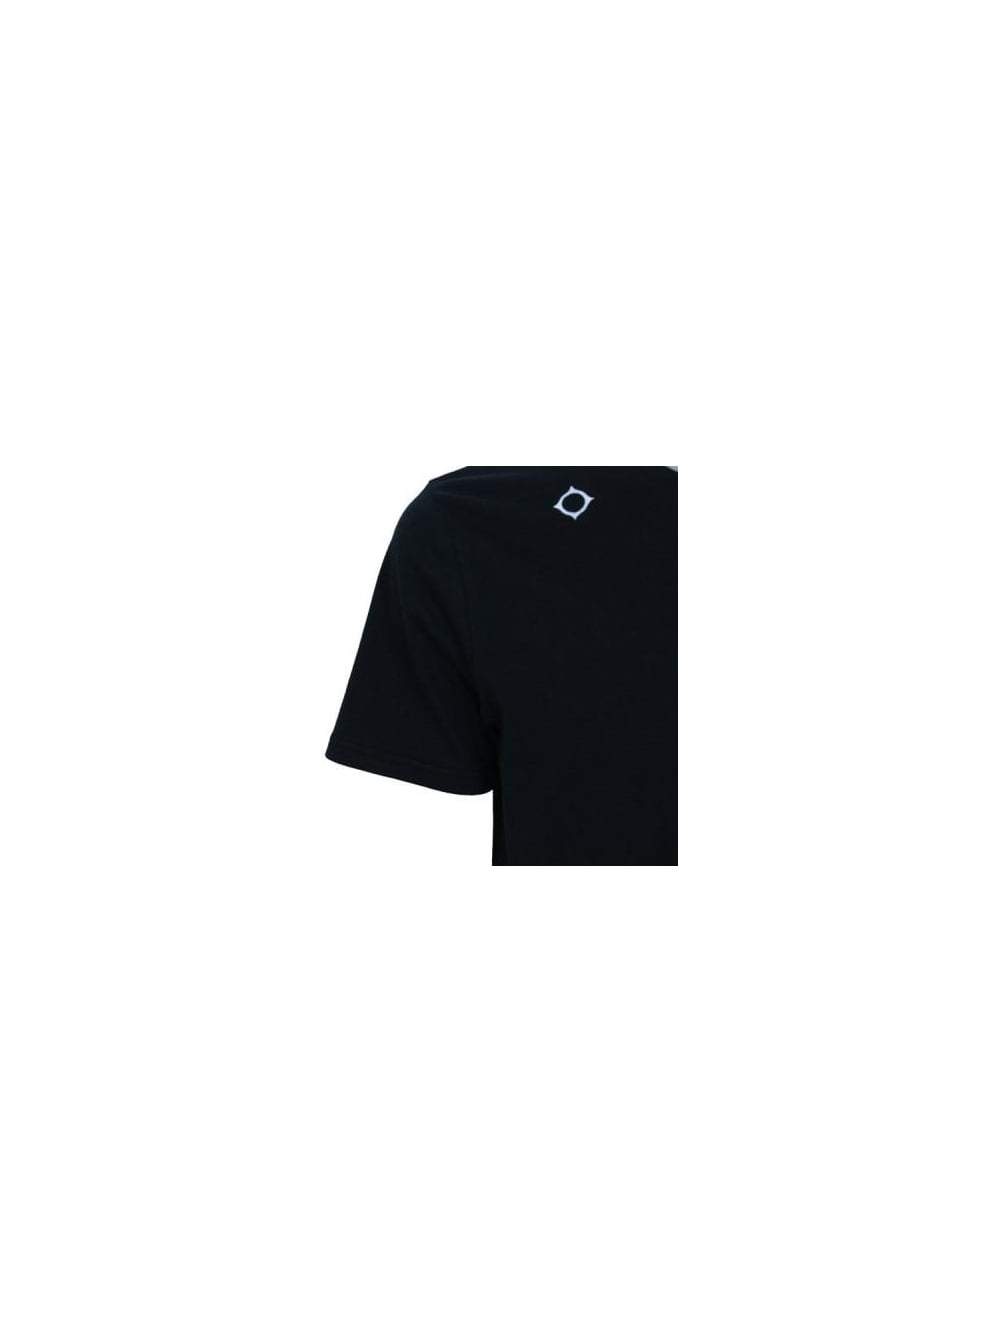 Black Compass Logo - MA Strum Compass Logo Kit Issue T.Shirt In Jet Black